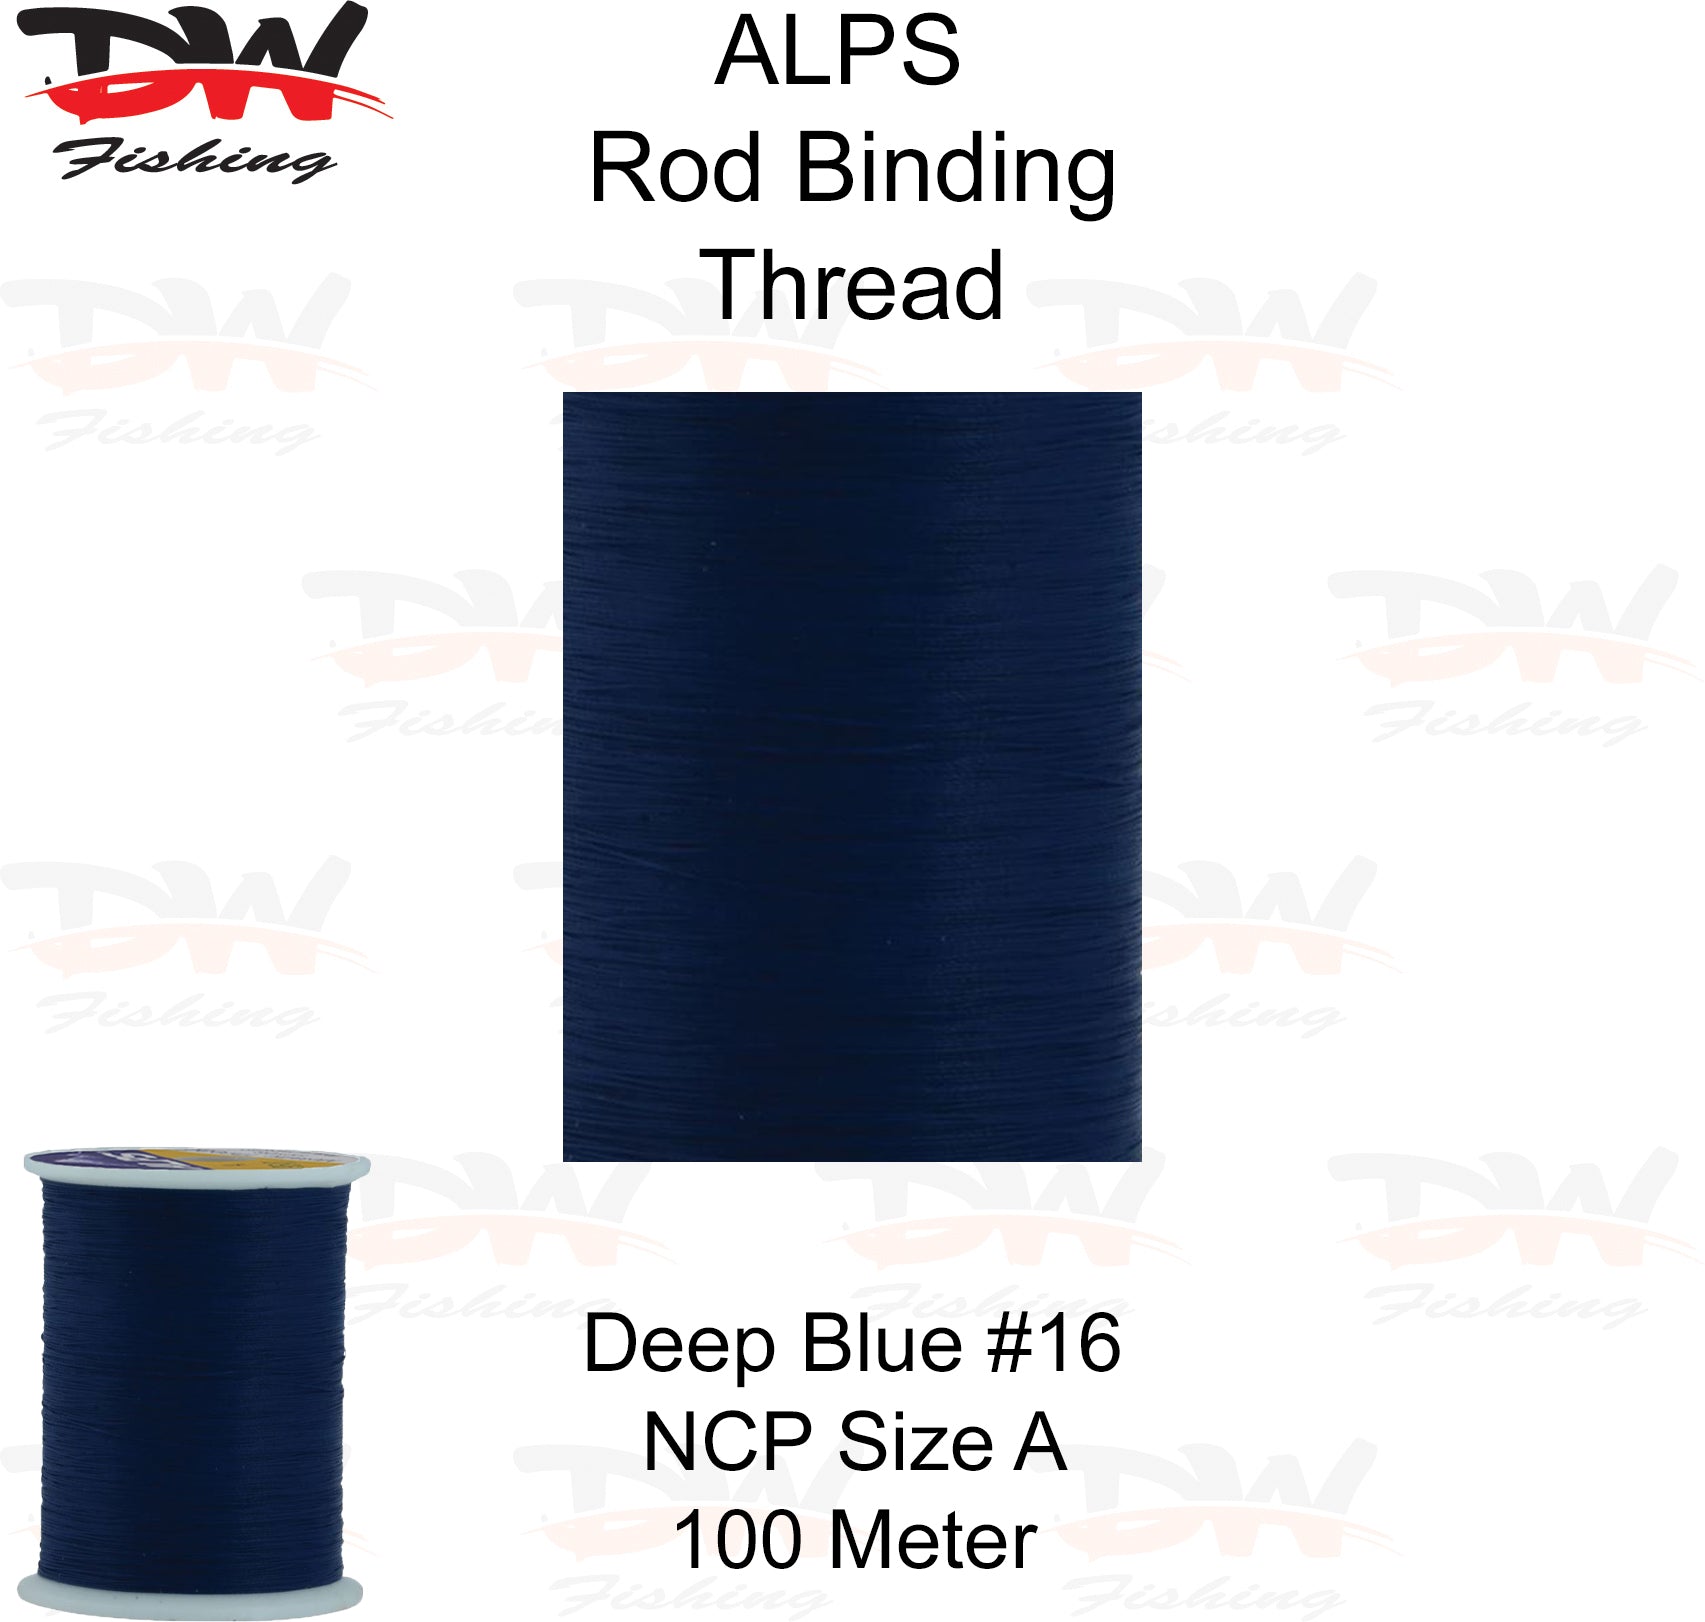 ALPS nylon rod binding thread deep blue